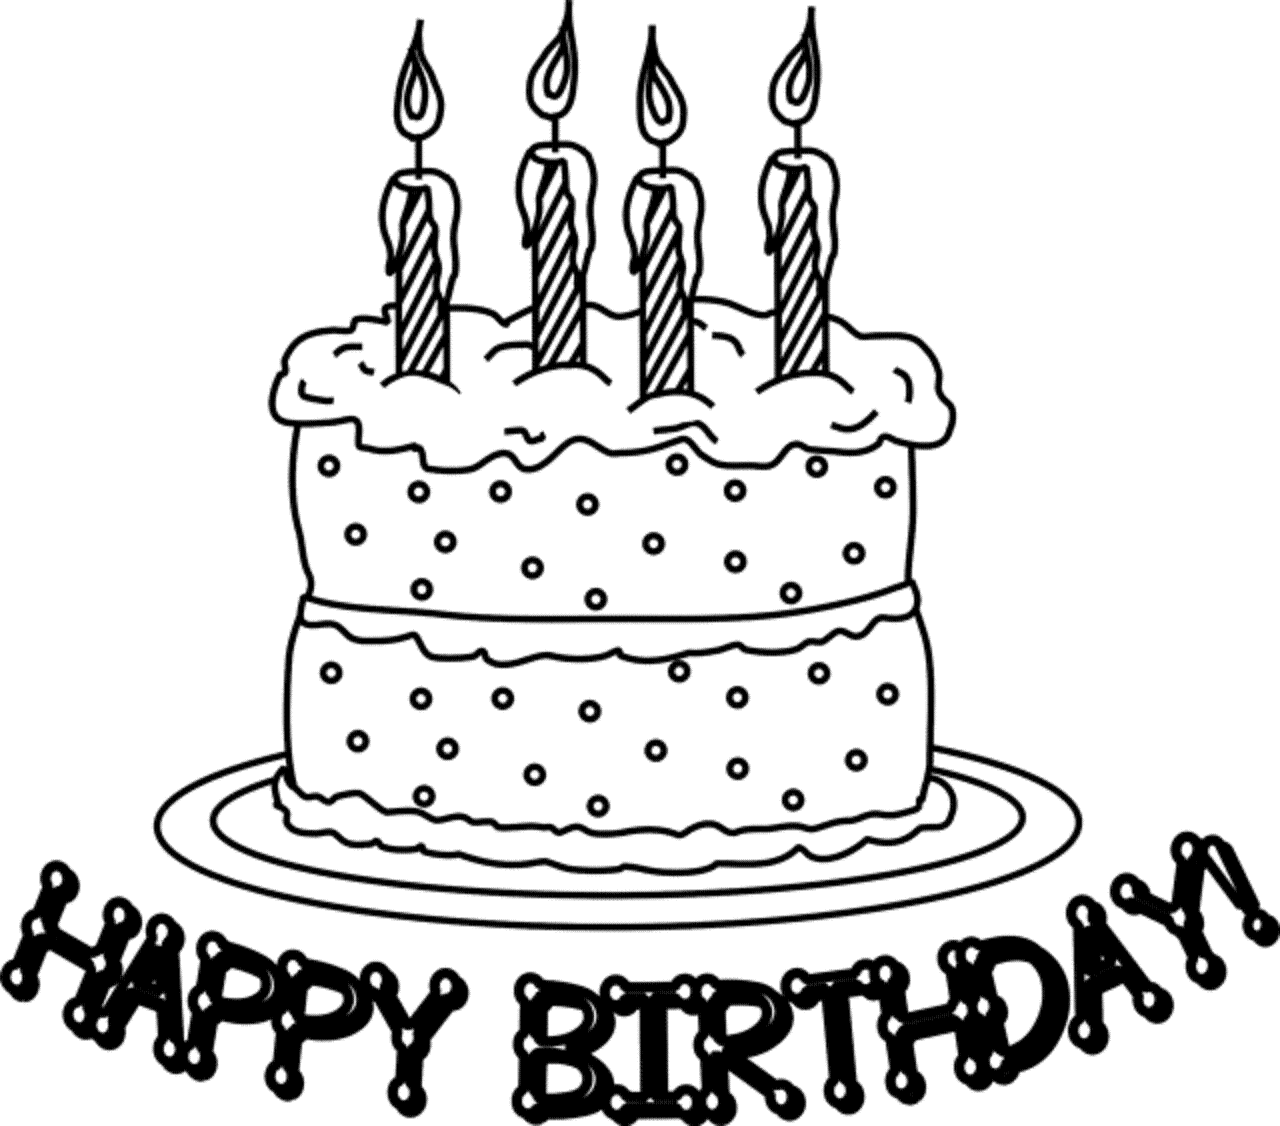 Free Birthday Cake Drawing, Download Free Birthday Cake Drawing png ...